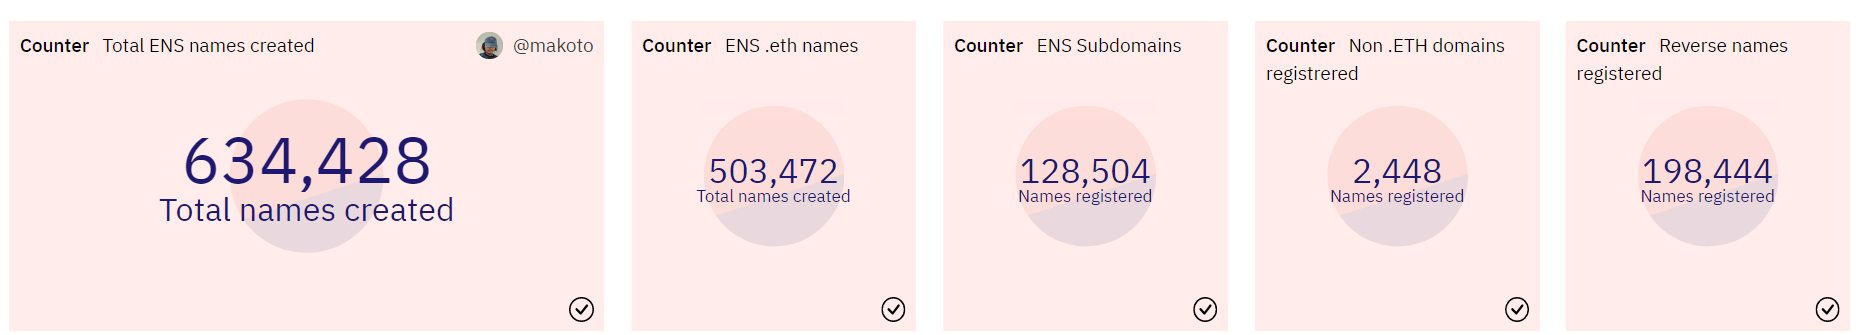 ENS exceeds 500000 registered domain names